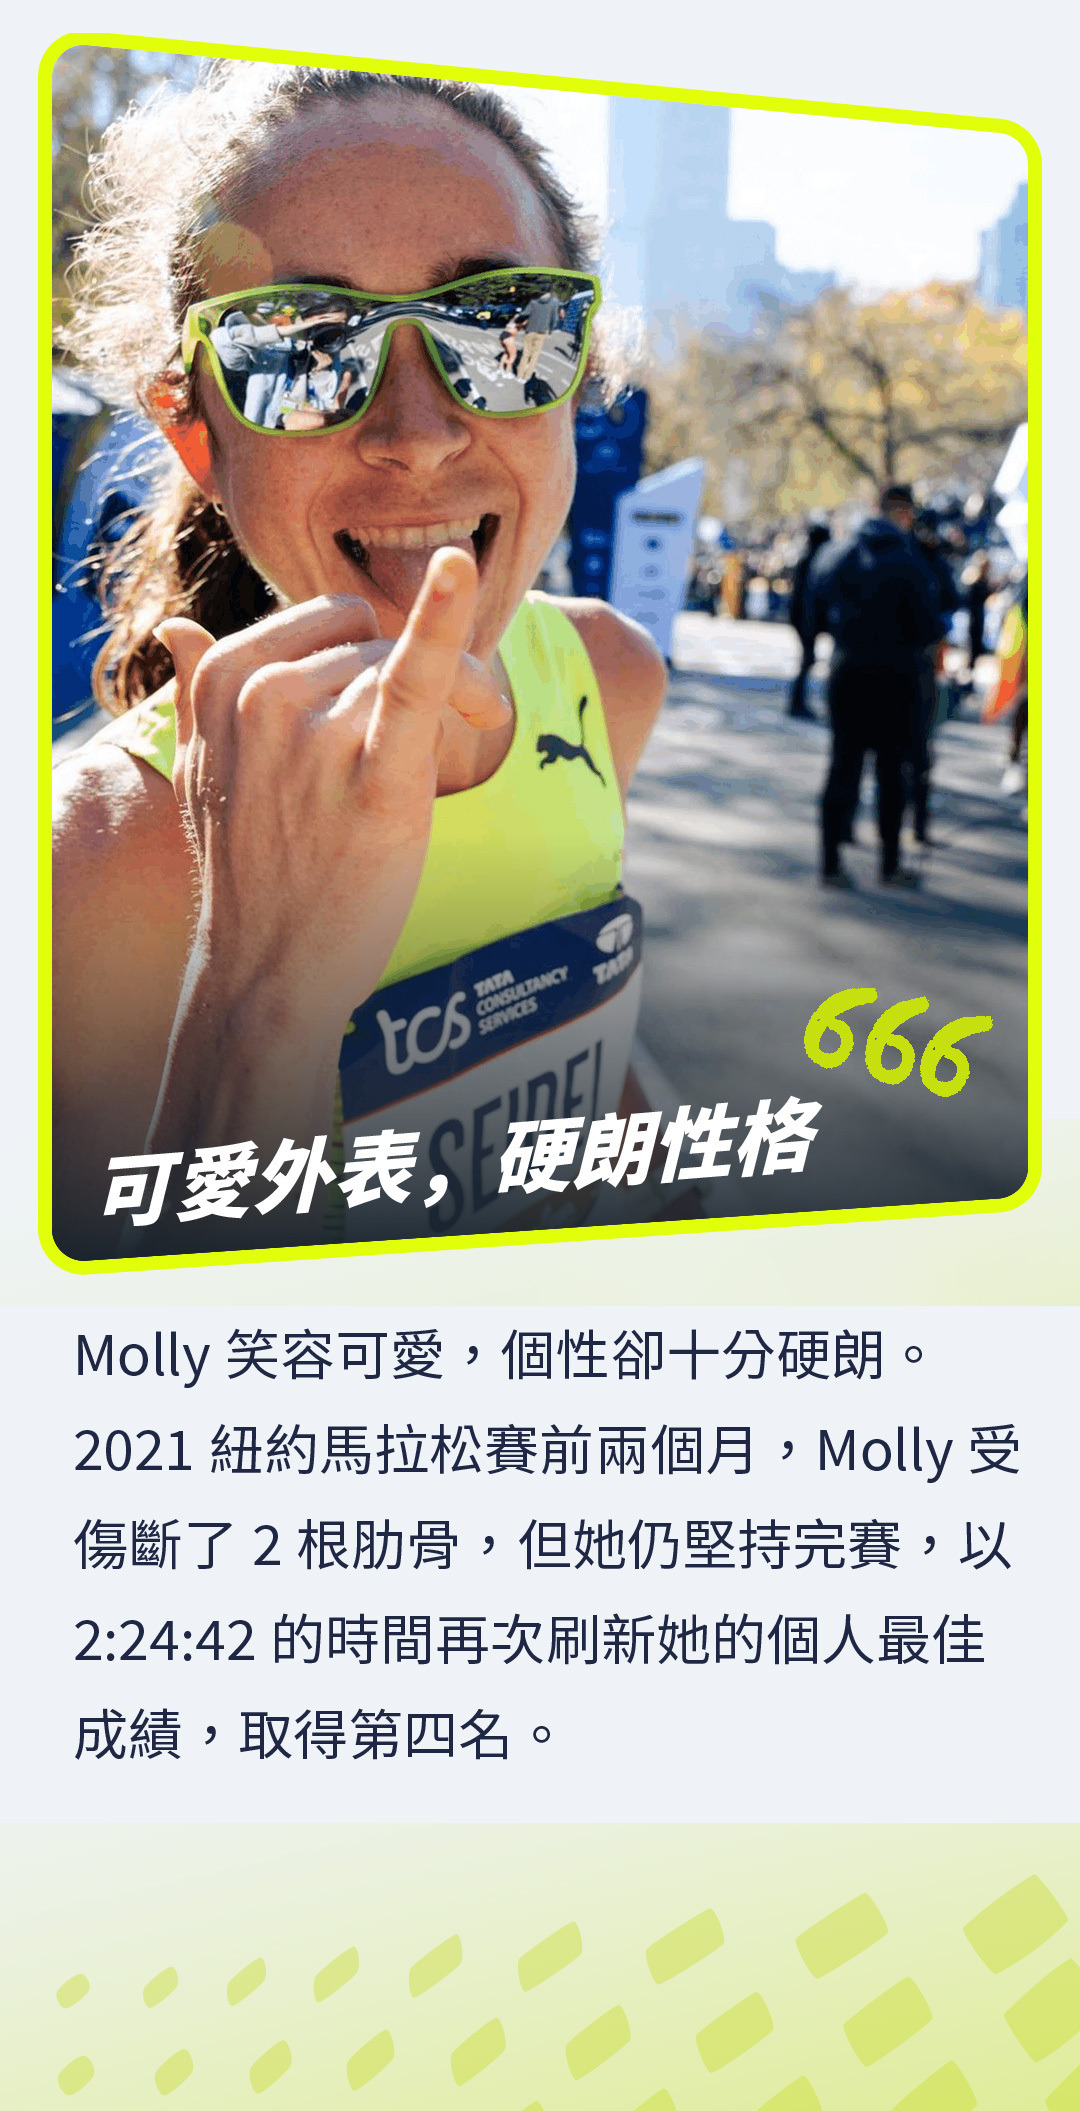 Molly笑容可愛，個性卻十分硬朗。2021紐約馬拉松賽前兩個月，Molly受傷斷了2根肋骨，但她仍堅持完賽，以2:24:42的時間再次刷新她的個人最佳成績，取得第四名。